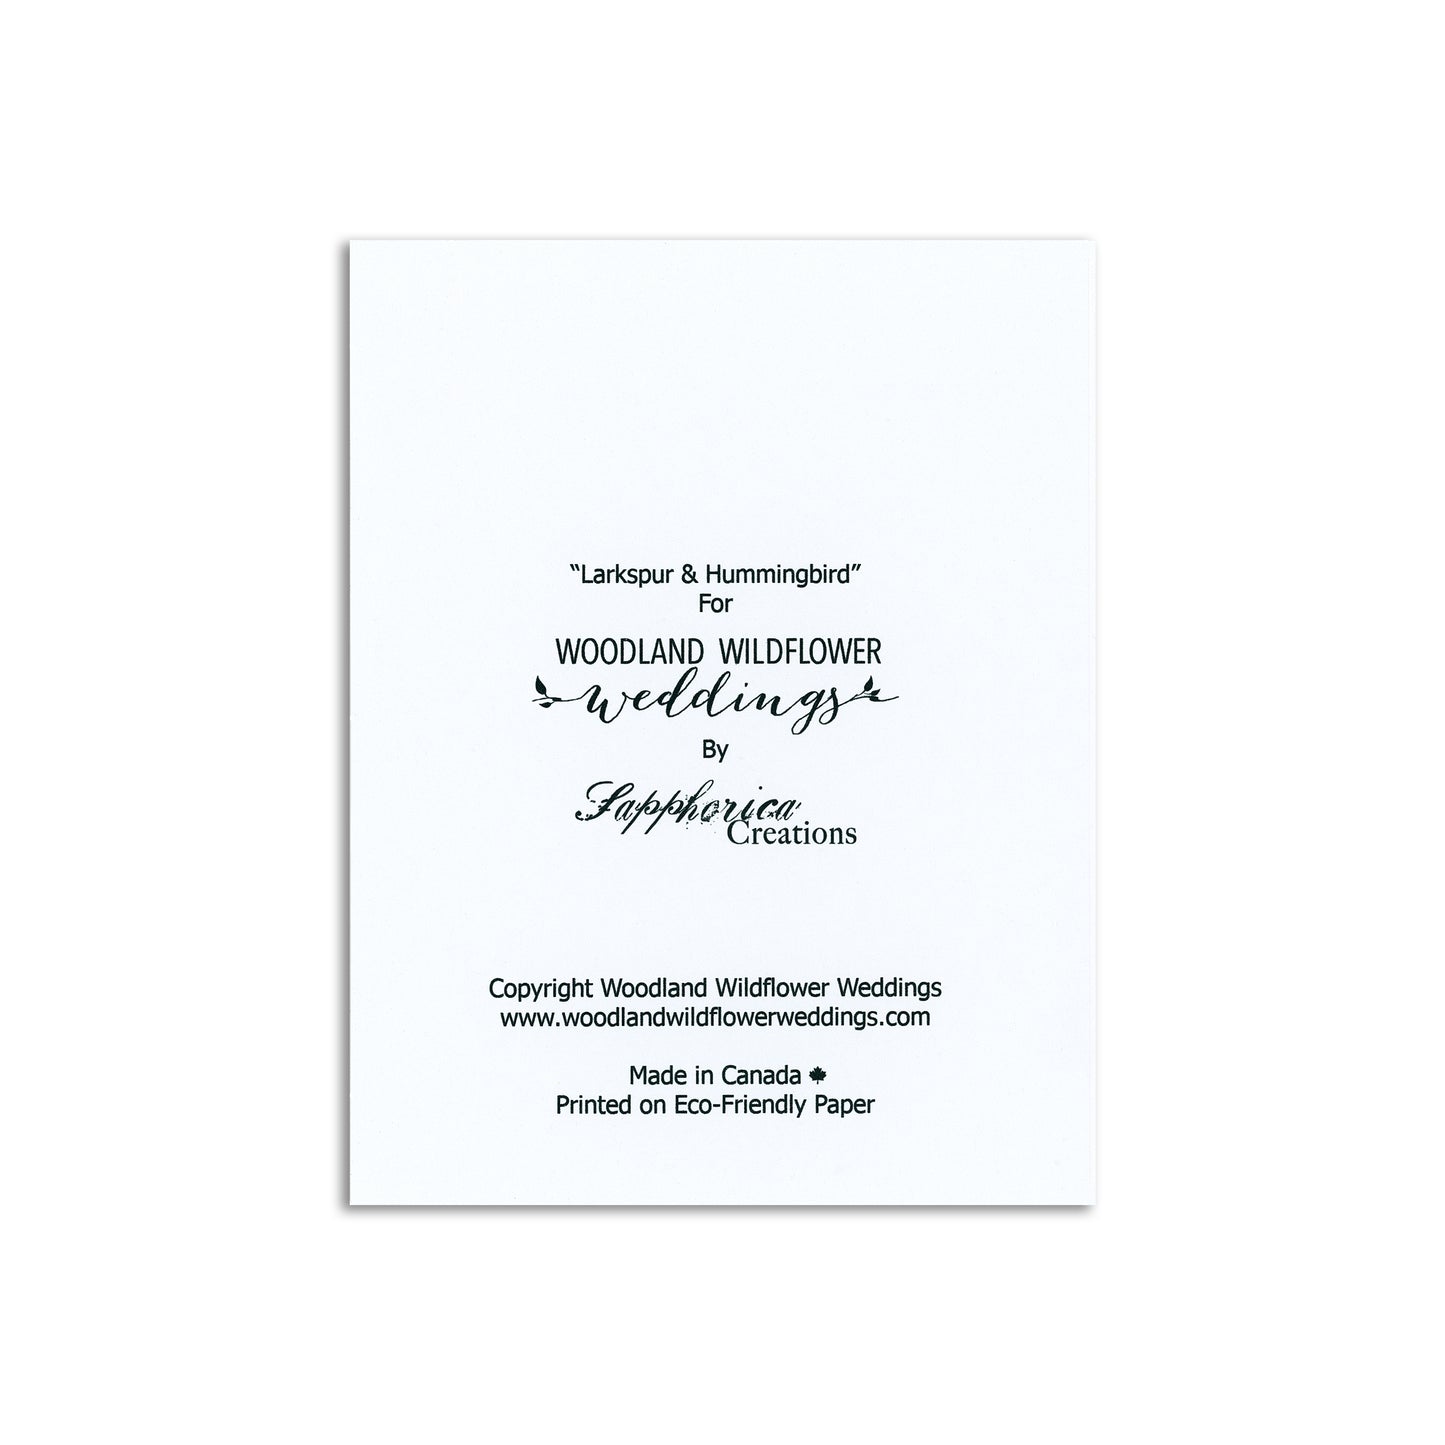 Woodland Wildflower x Sapphorica Creations- Larkspur & Hummingbird Art Card - Sapphorica Creations 